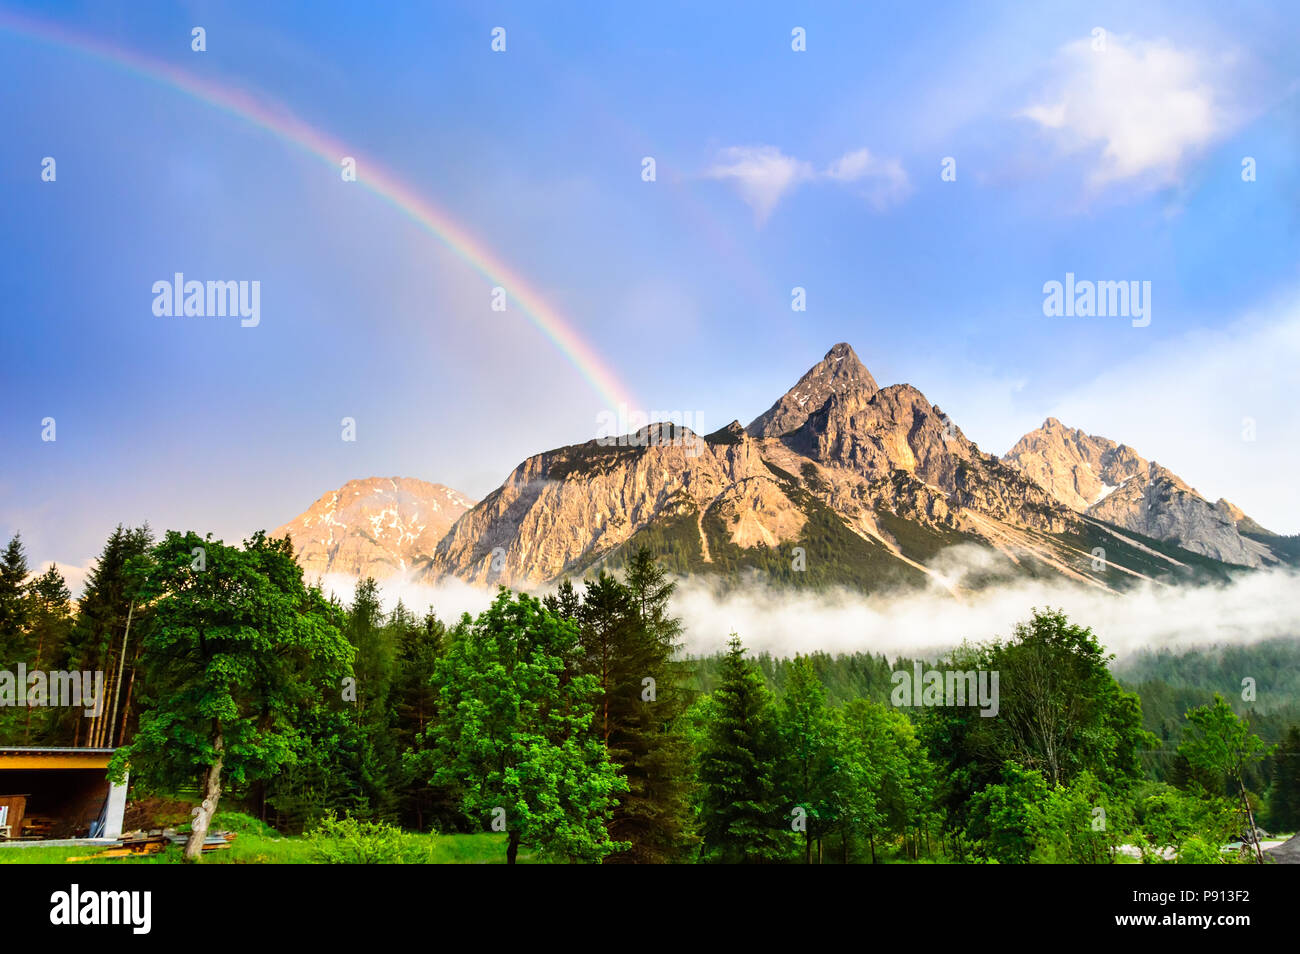 Rainbow over the Ehrwalder Sonnenspitze mountain in the austrian Alps - Ehrwald, Tyrol, Austria. Stock Photo